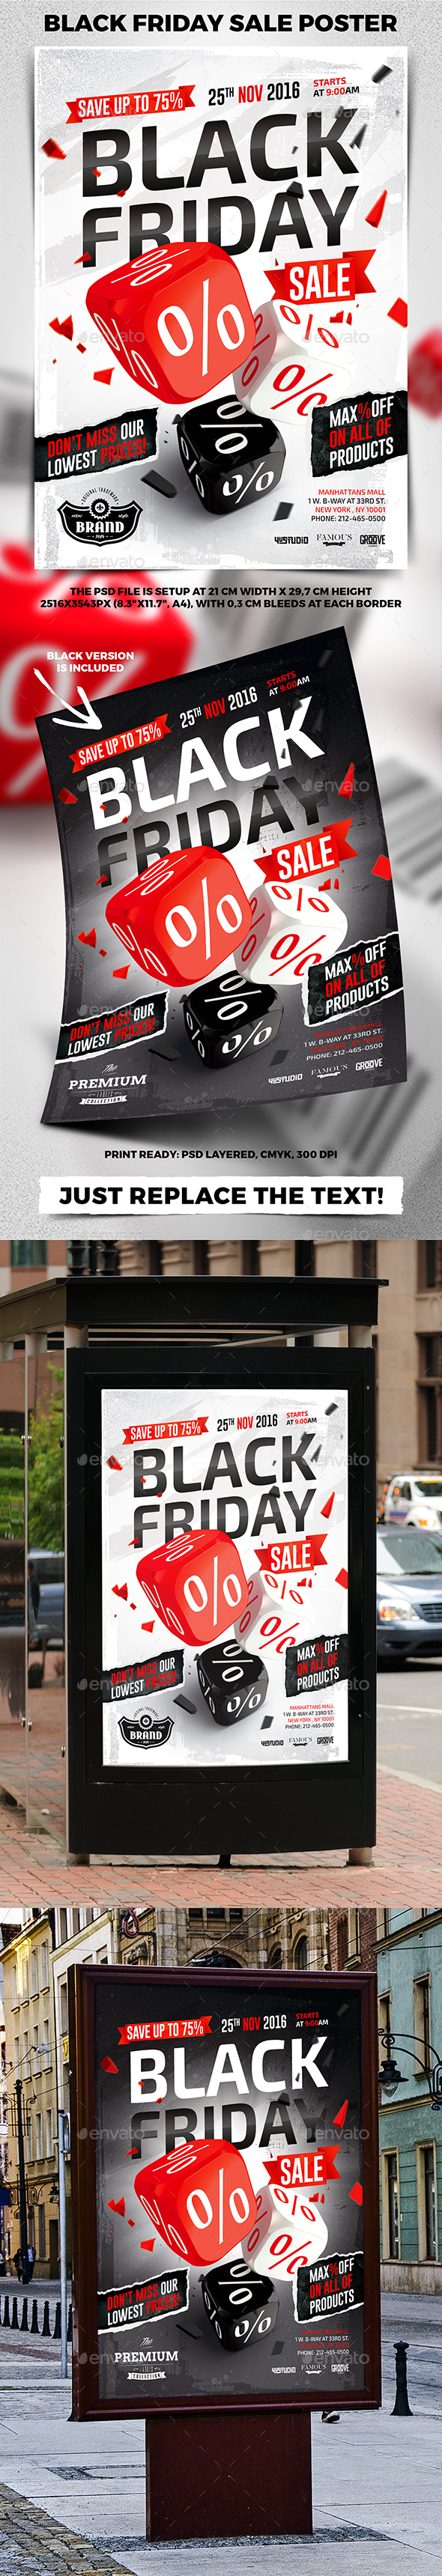 black_friday_sale_poster_by_4ustudio-dam